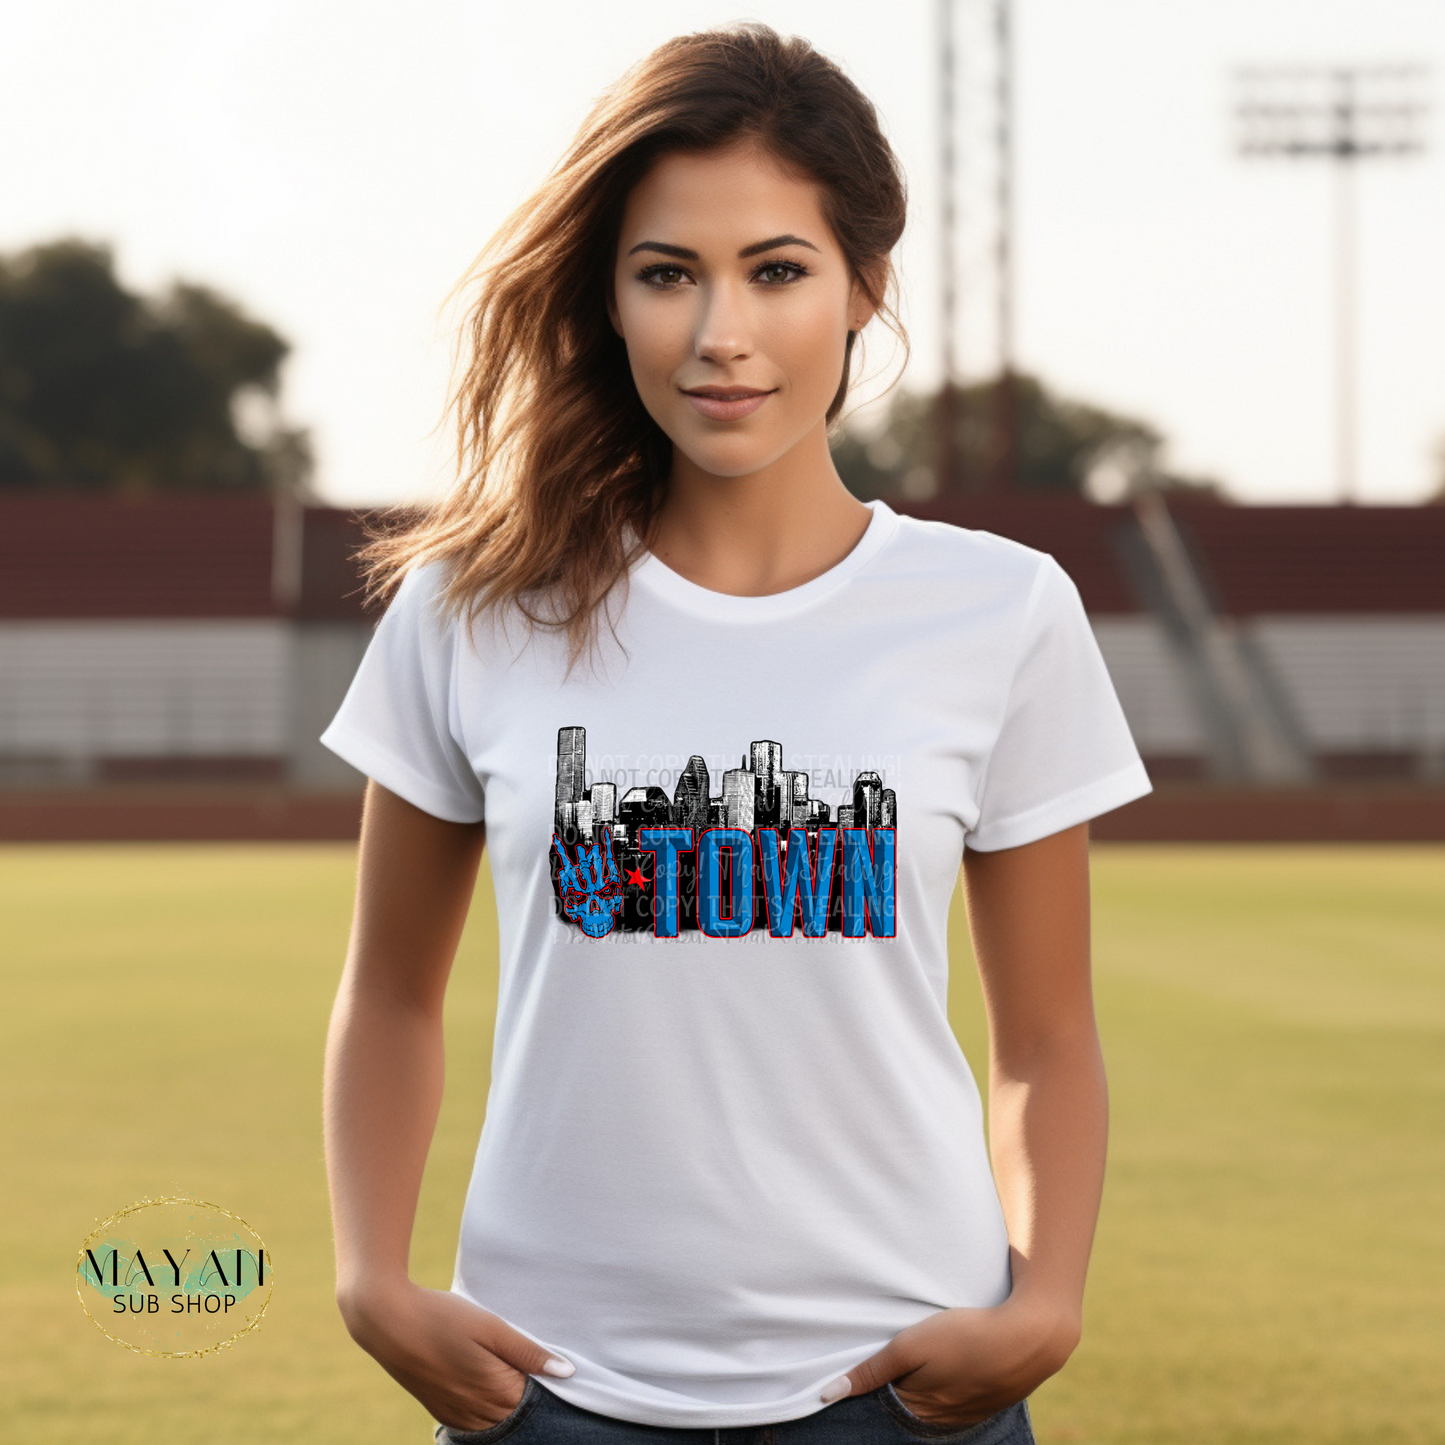 H-town Shirt - Mayan Sub Shop